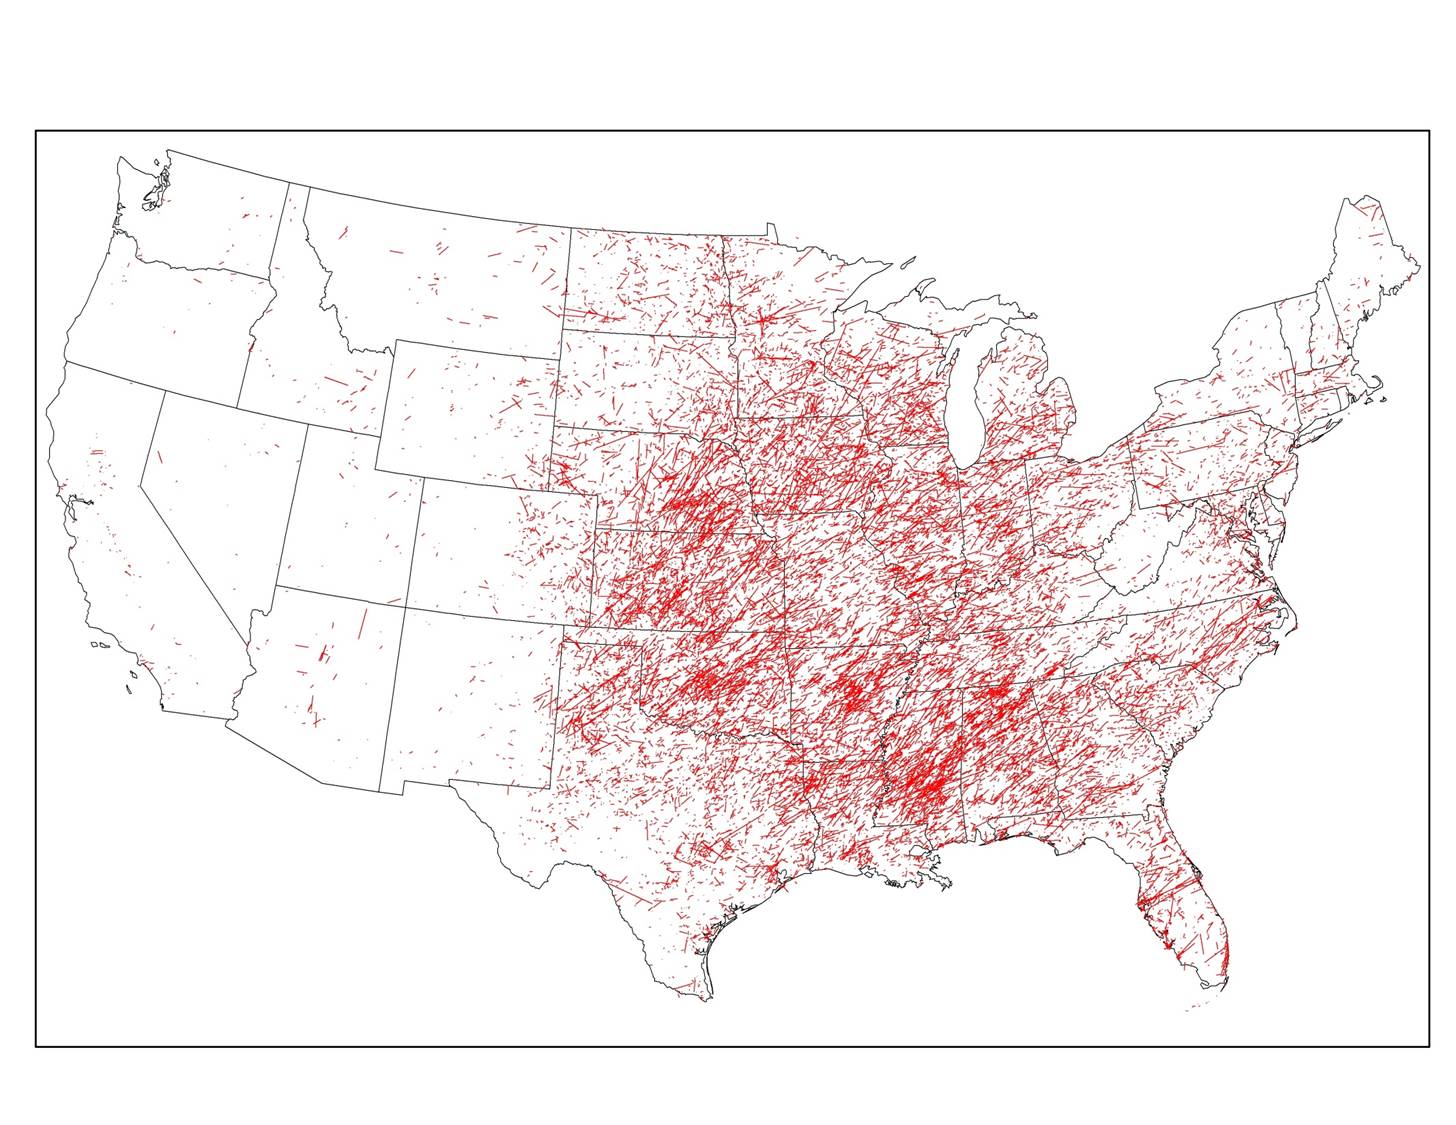 Tornado Paths Across the U.S.  (1950-Present)